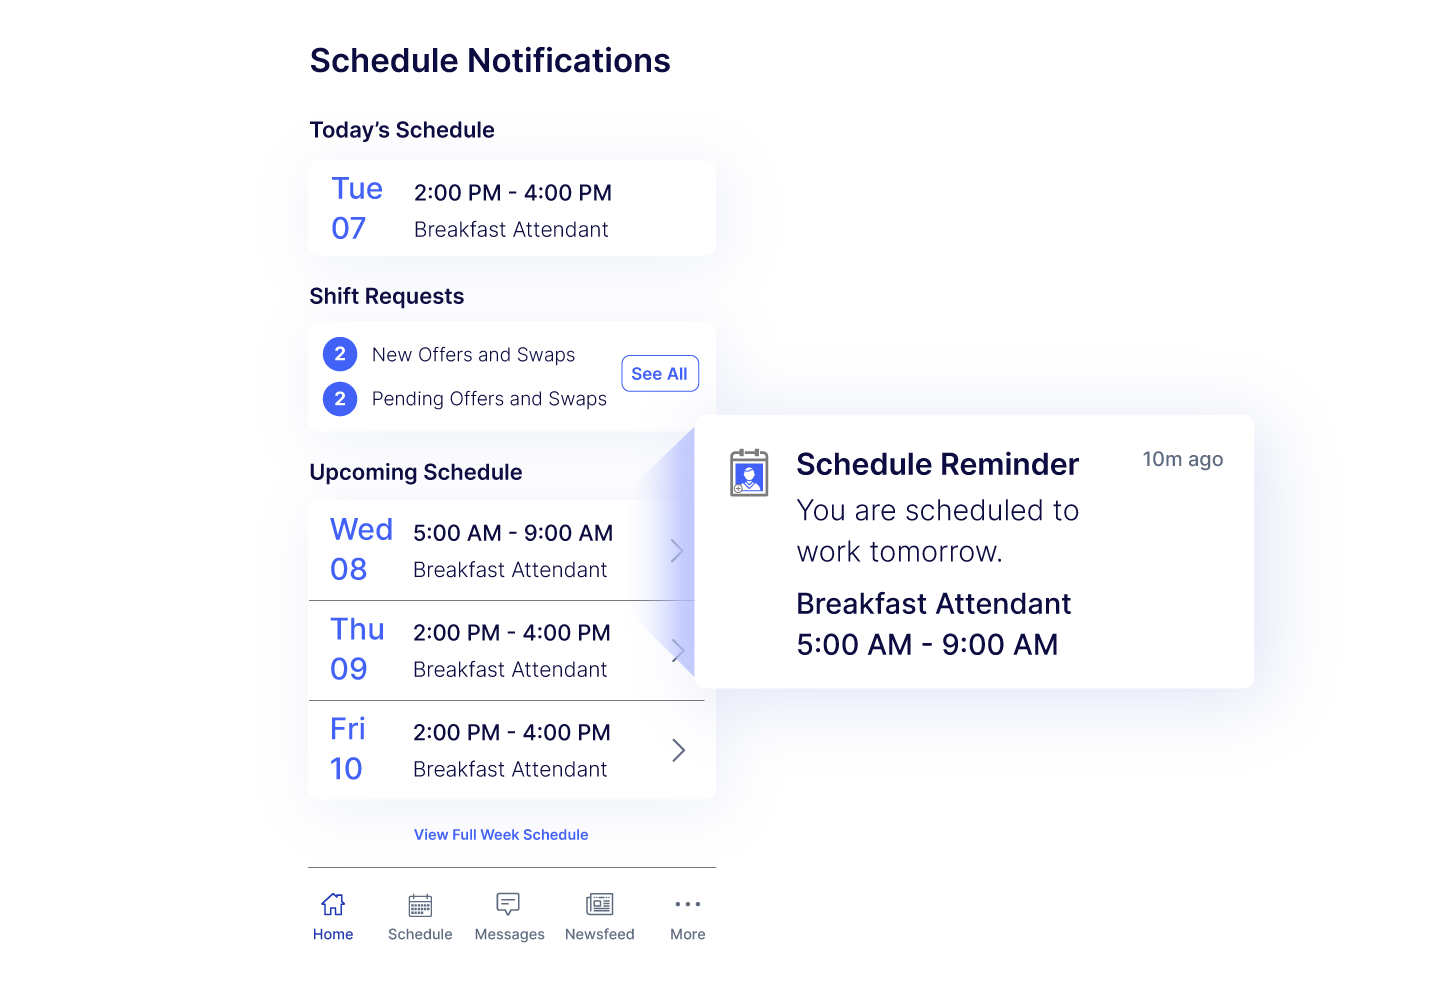 Schedule Notification in Hotel Employee Communications Software